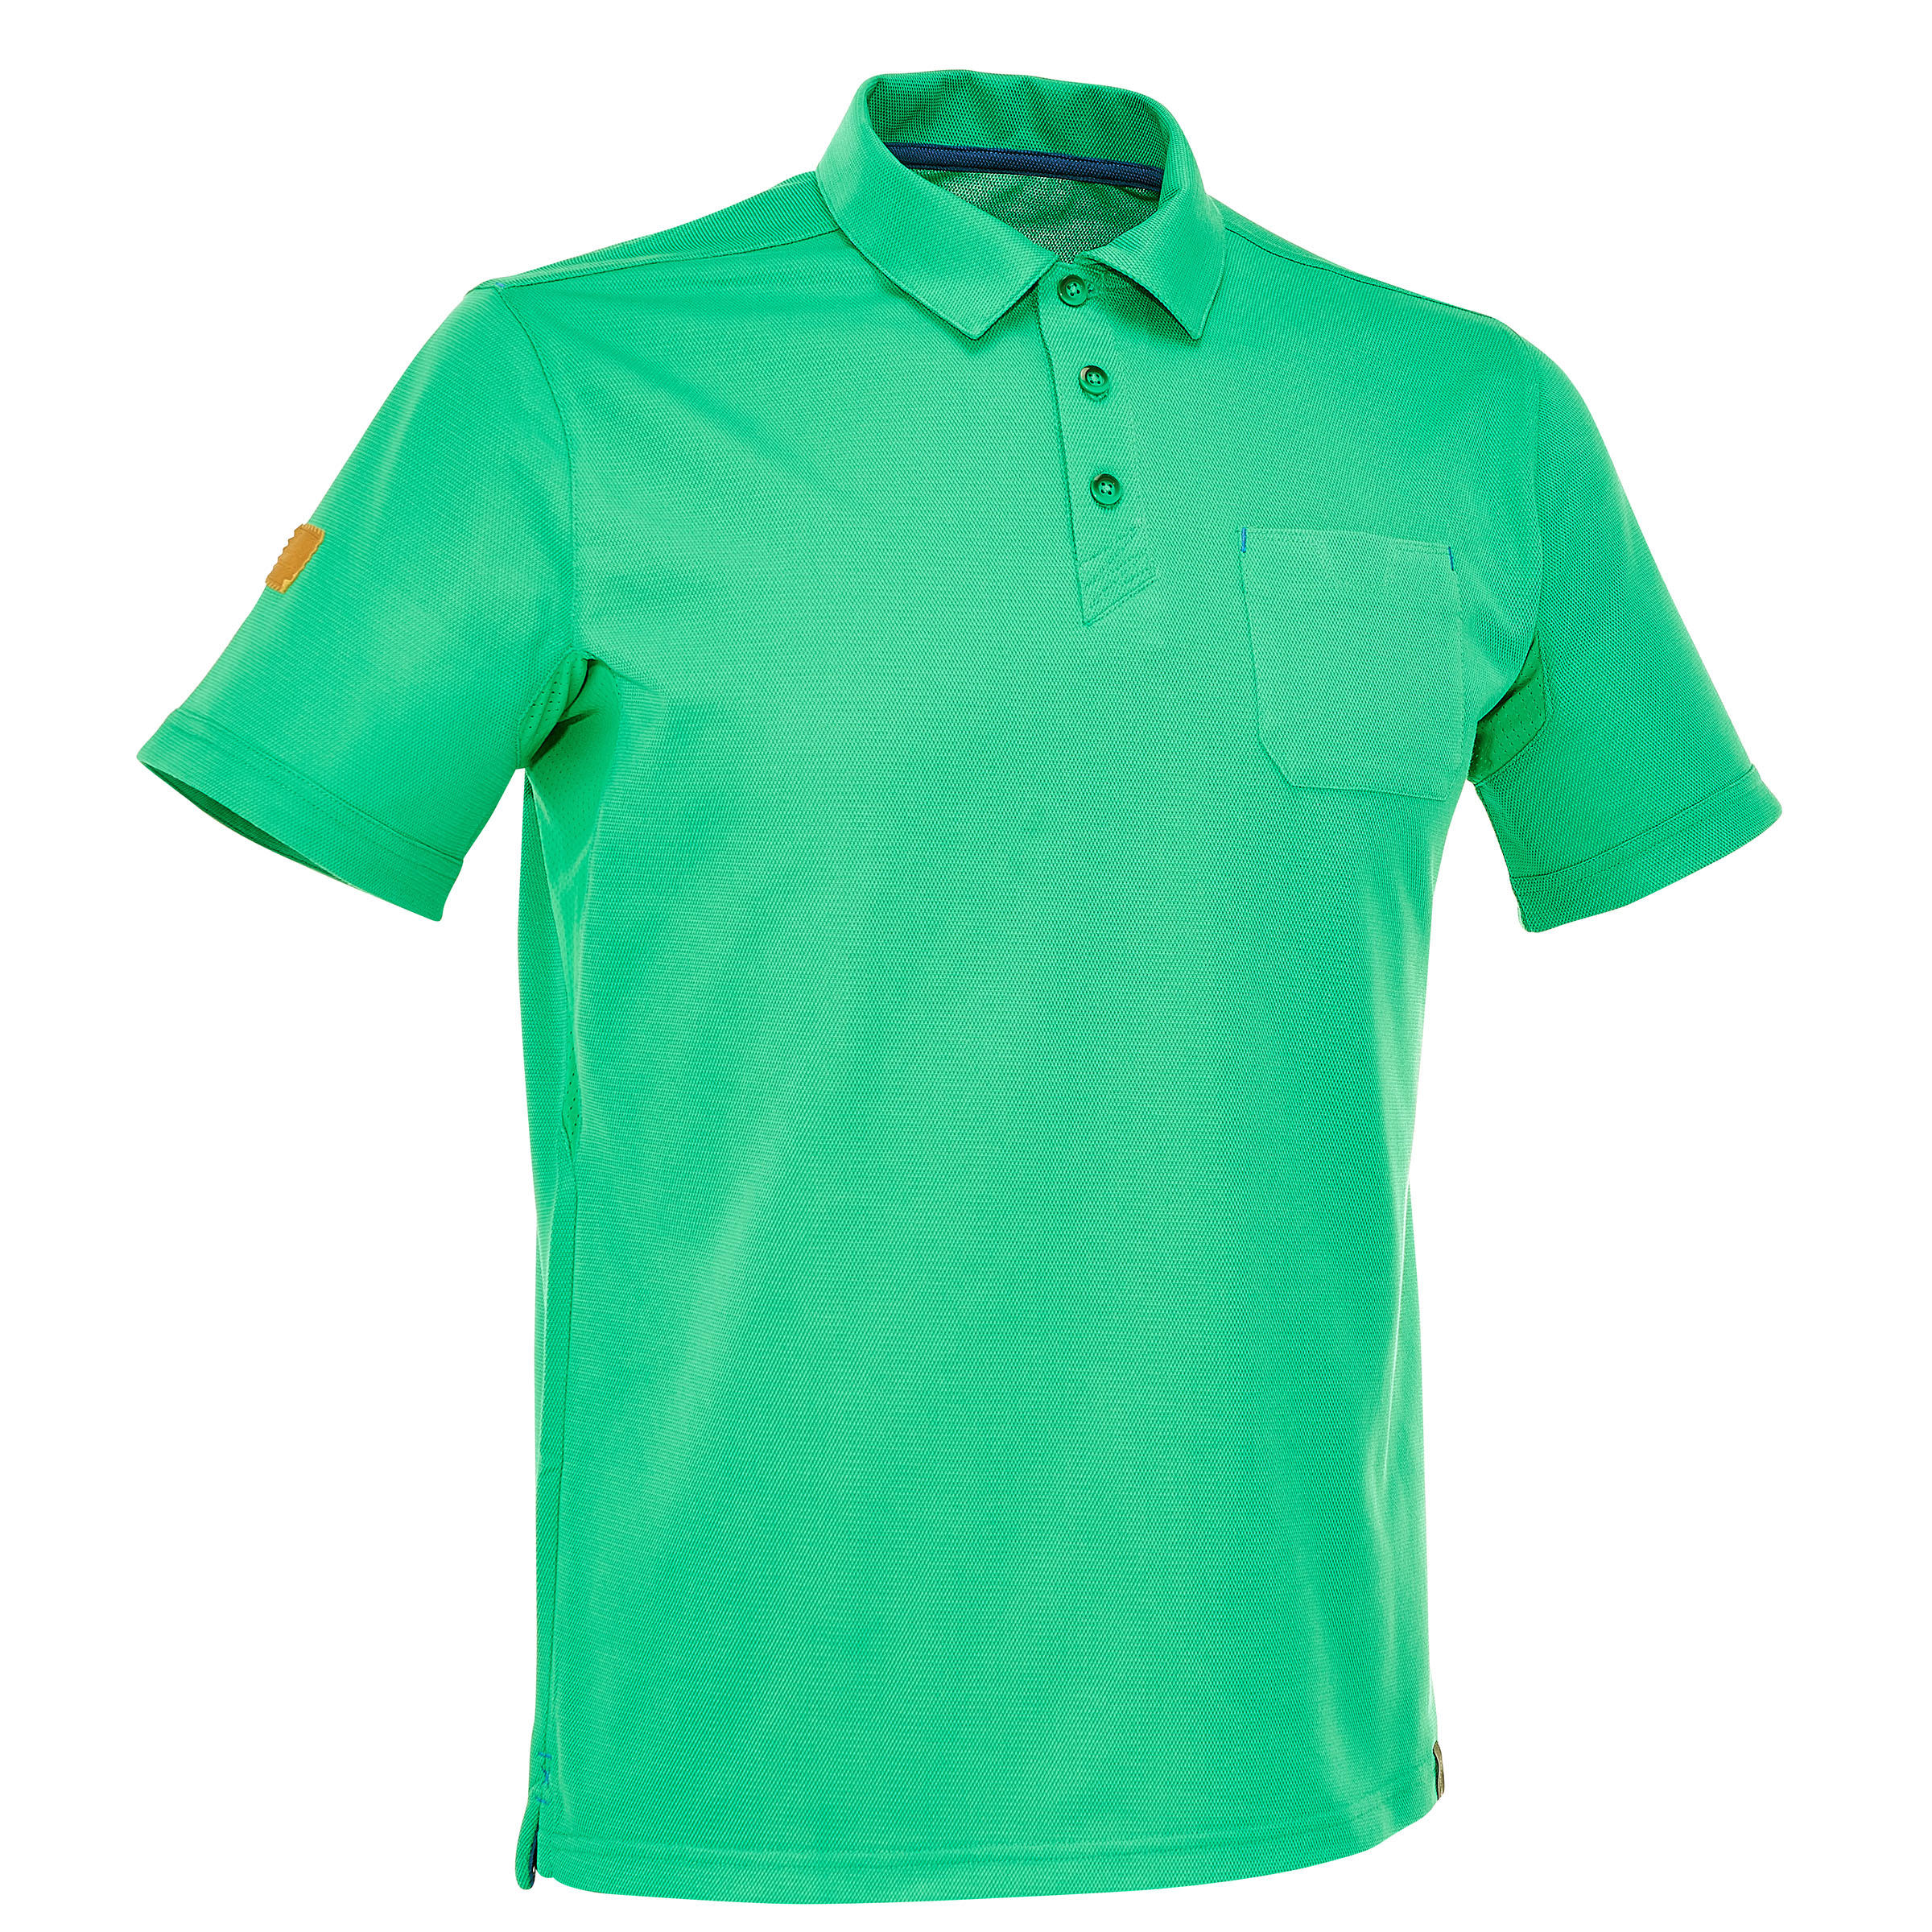 Arpenaz 500 Men's Hiking Polo Shirt - Green 1/10